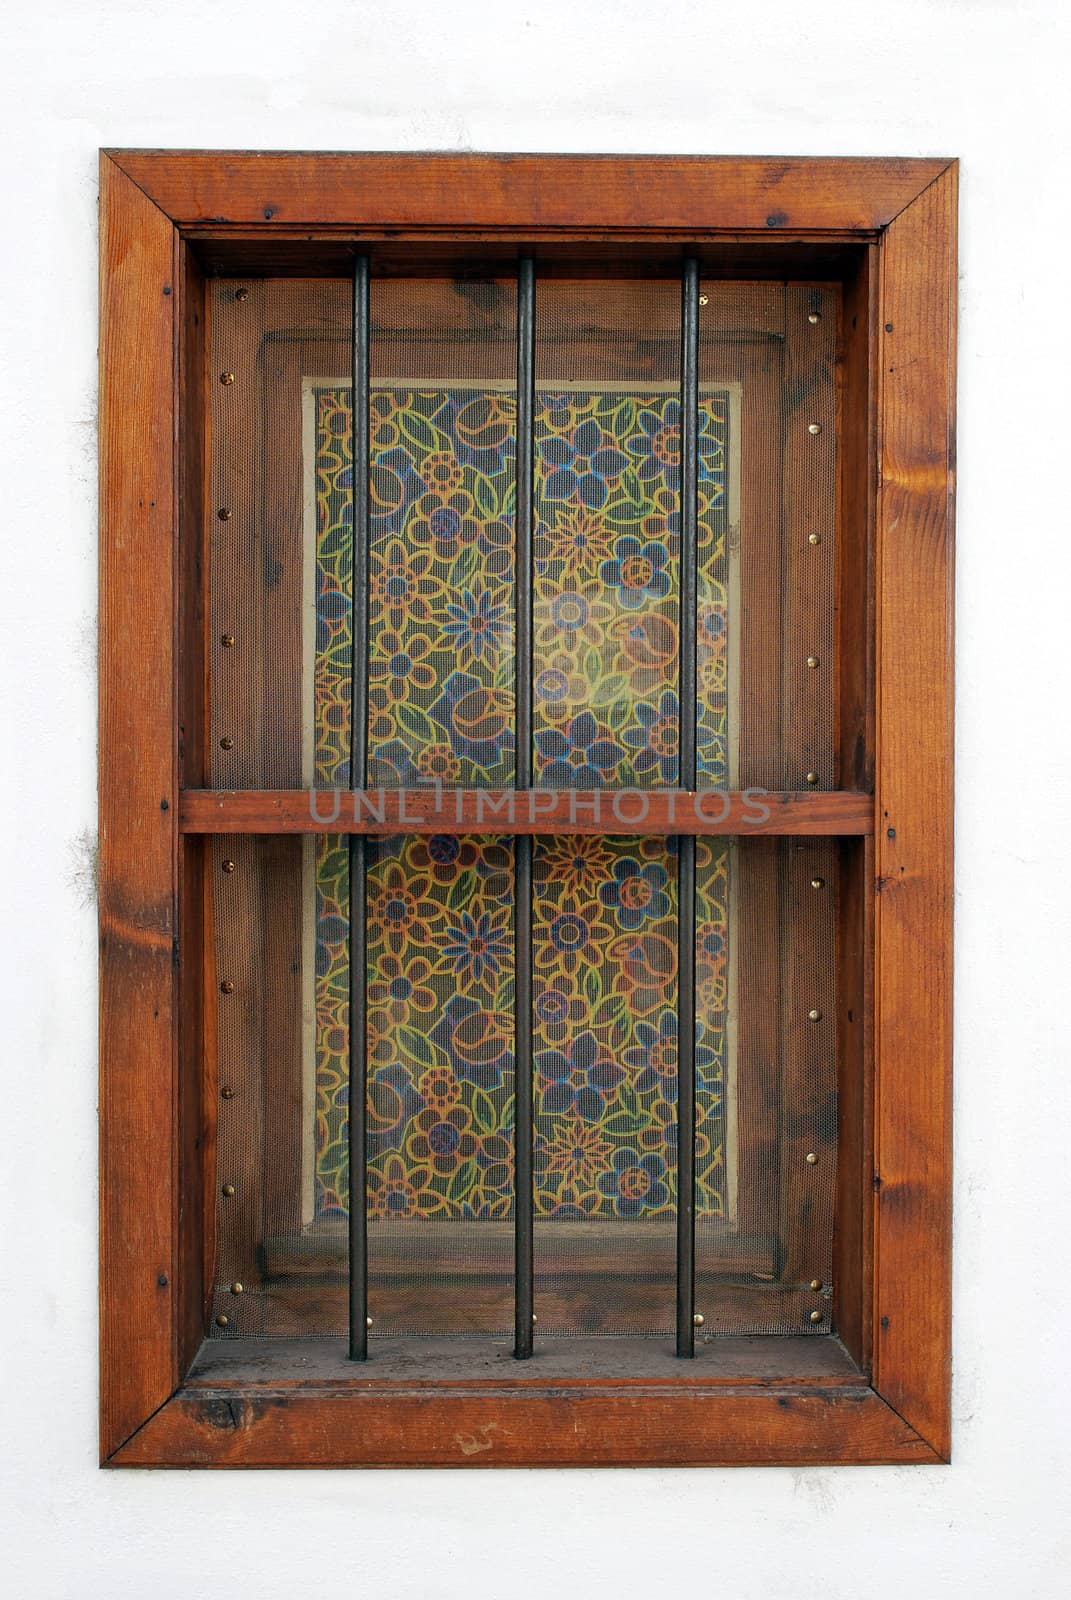 wooden window in old bulgarian style